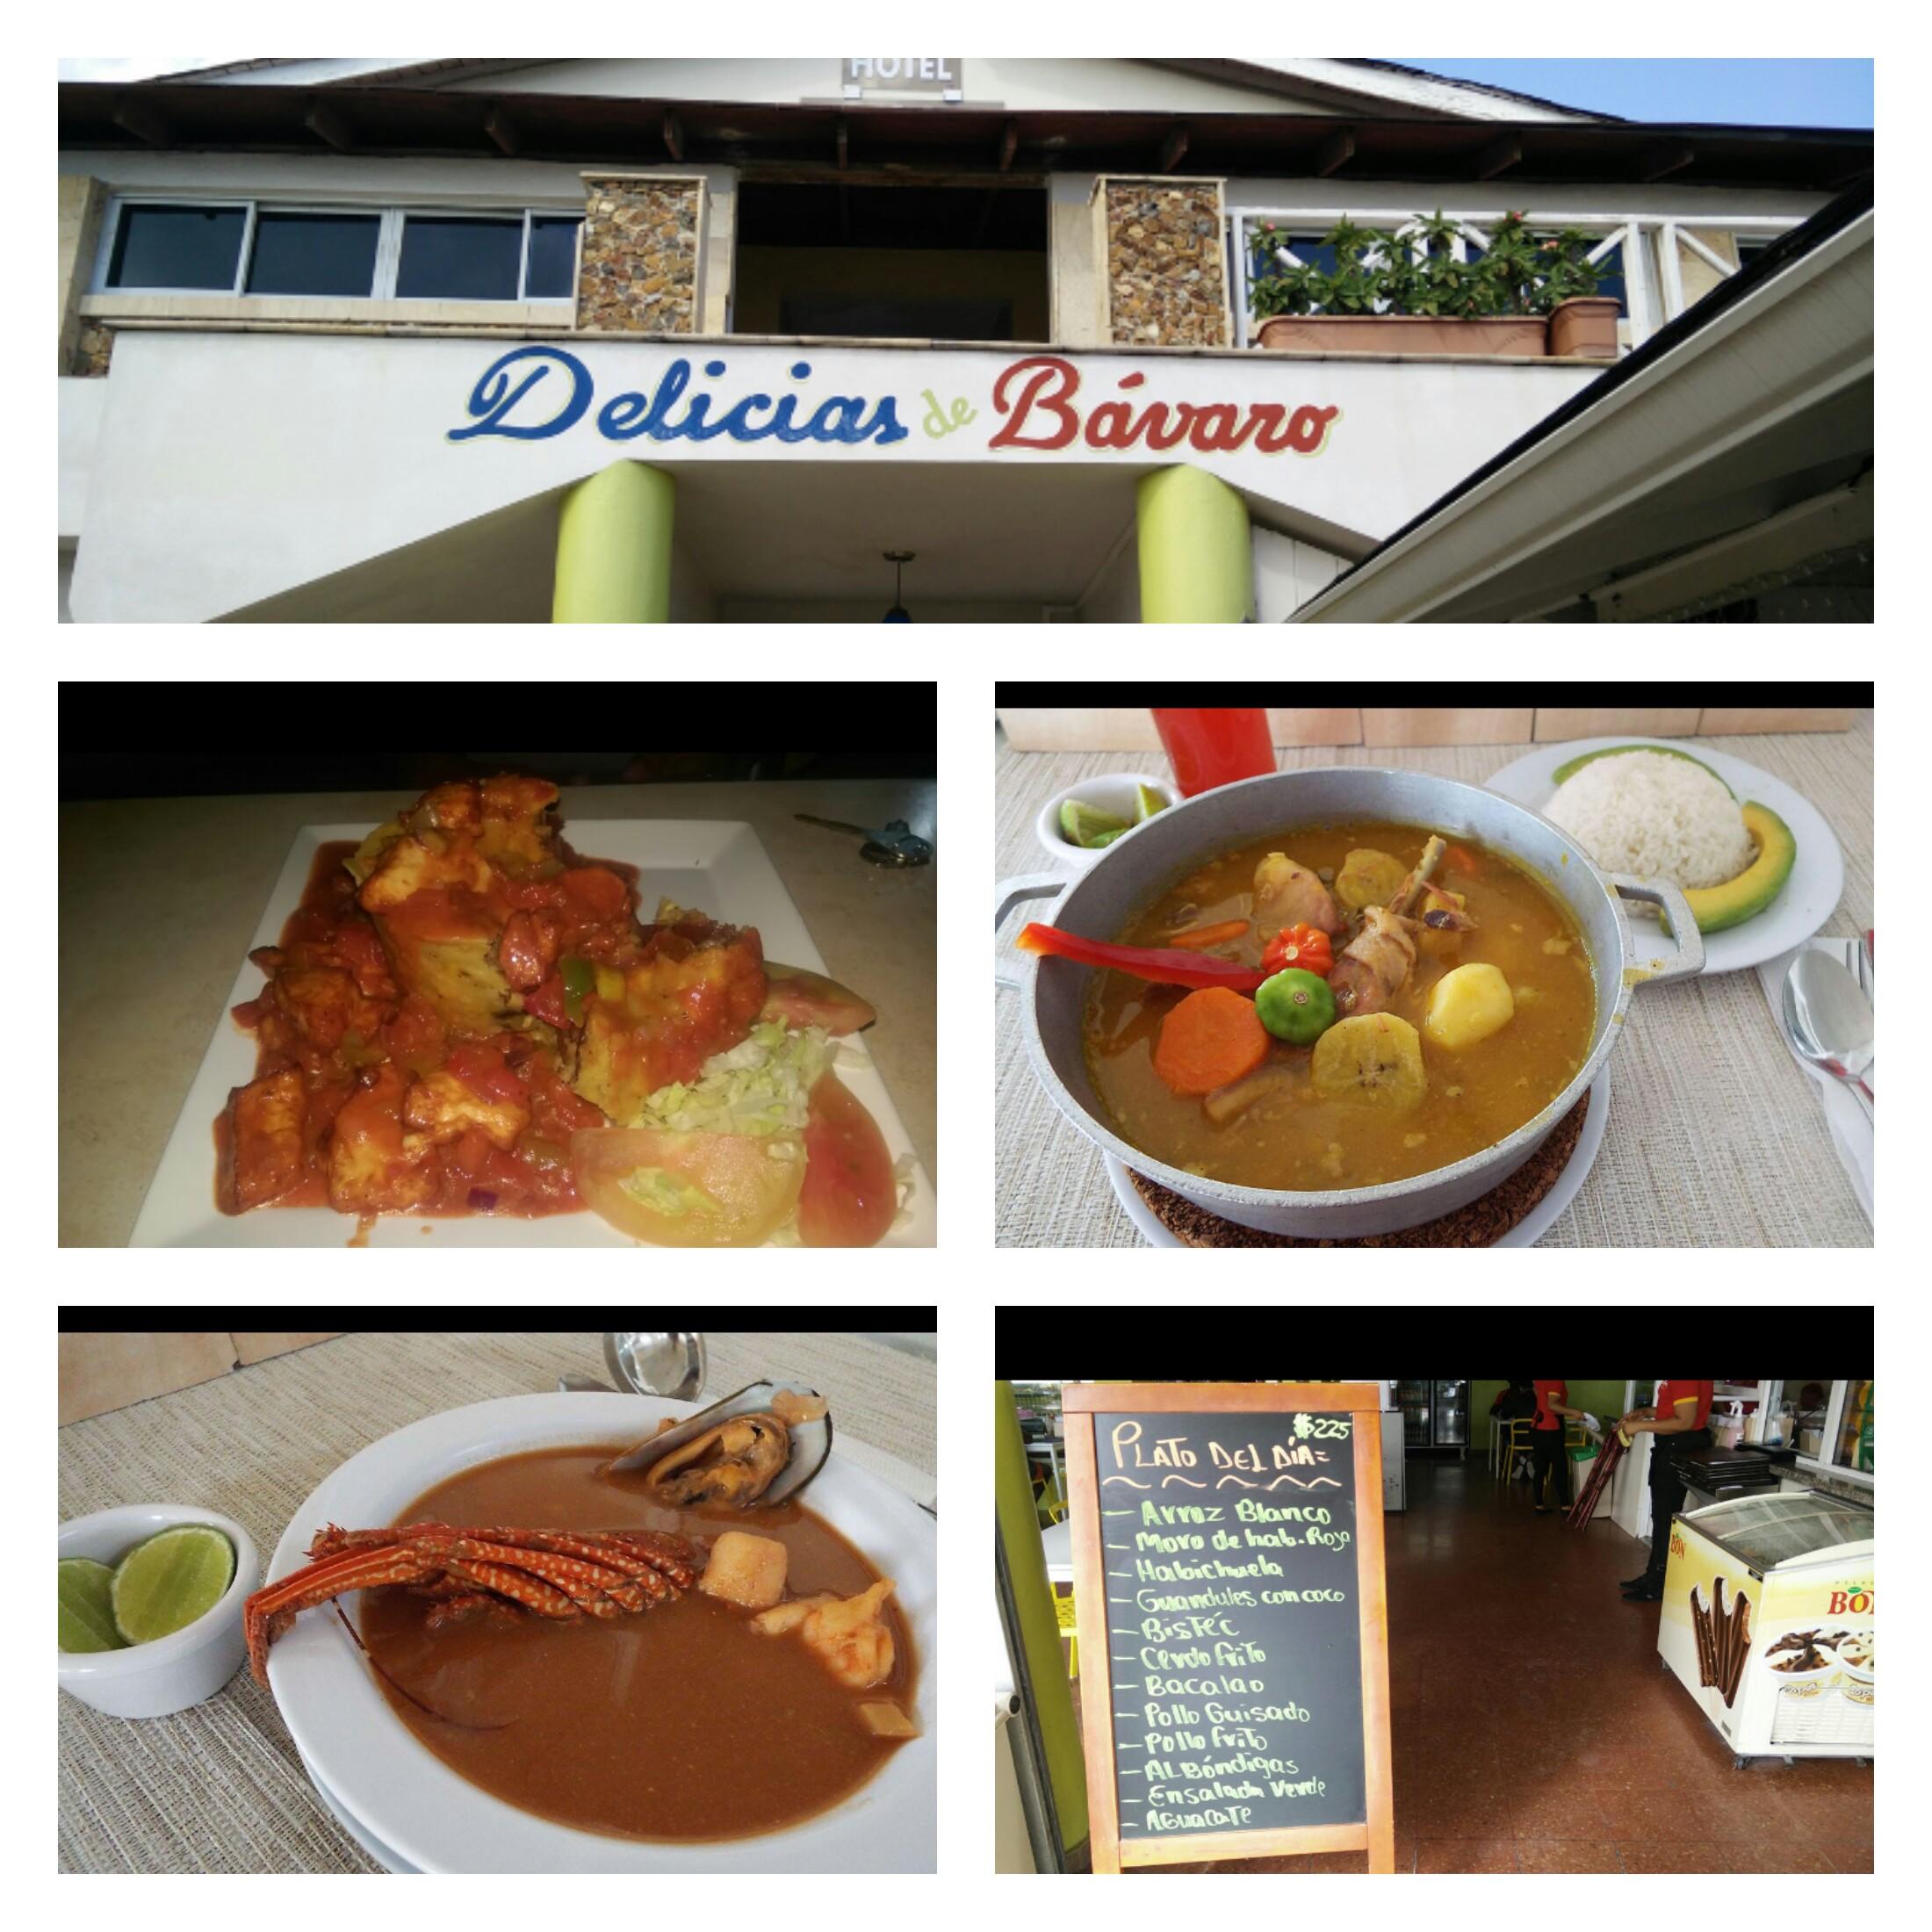 Cover image of this place Delicias de Bávaro